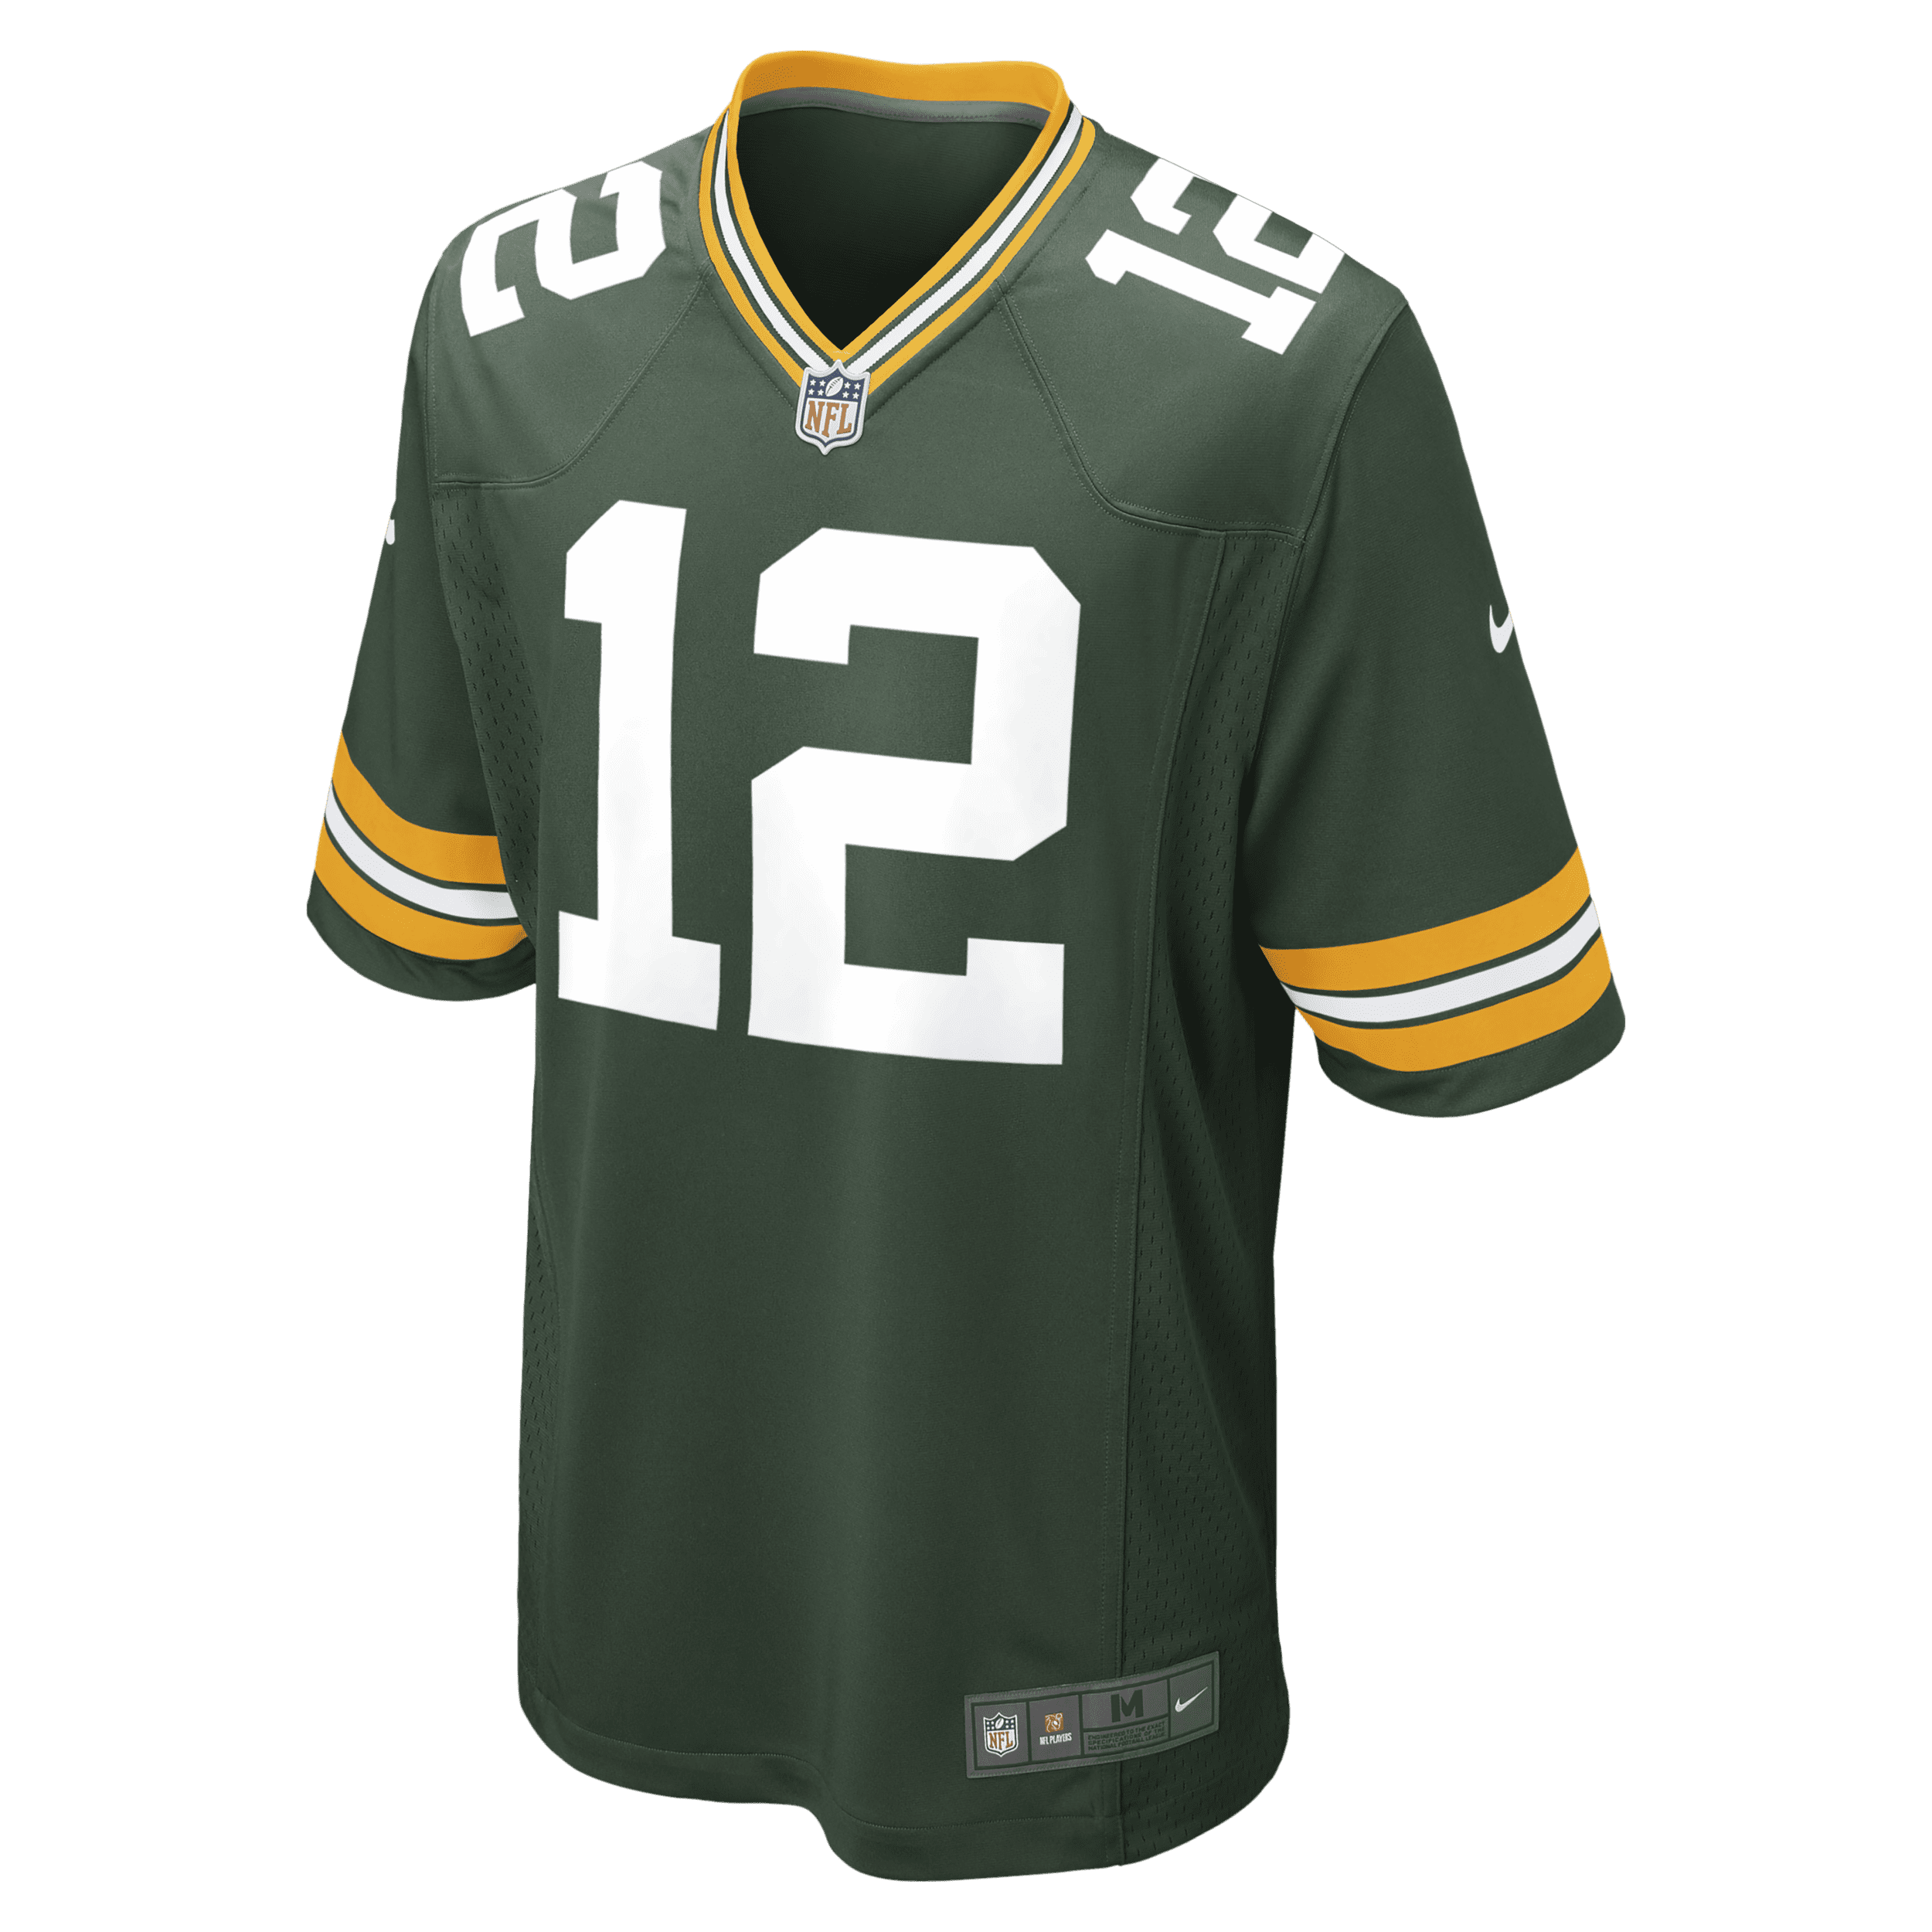 Nike NFL Green Bay Packers (Aaron Rodgers) Camiseta de fútbol americano - Hombre - Verde